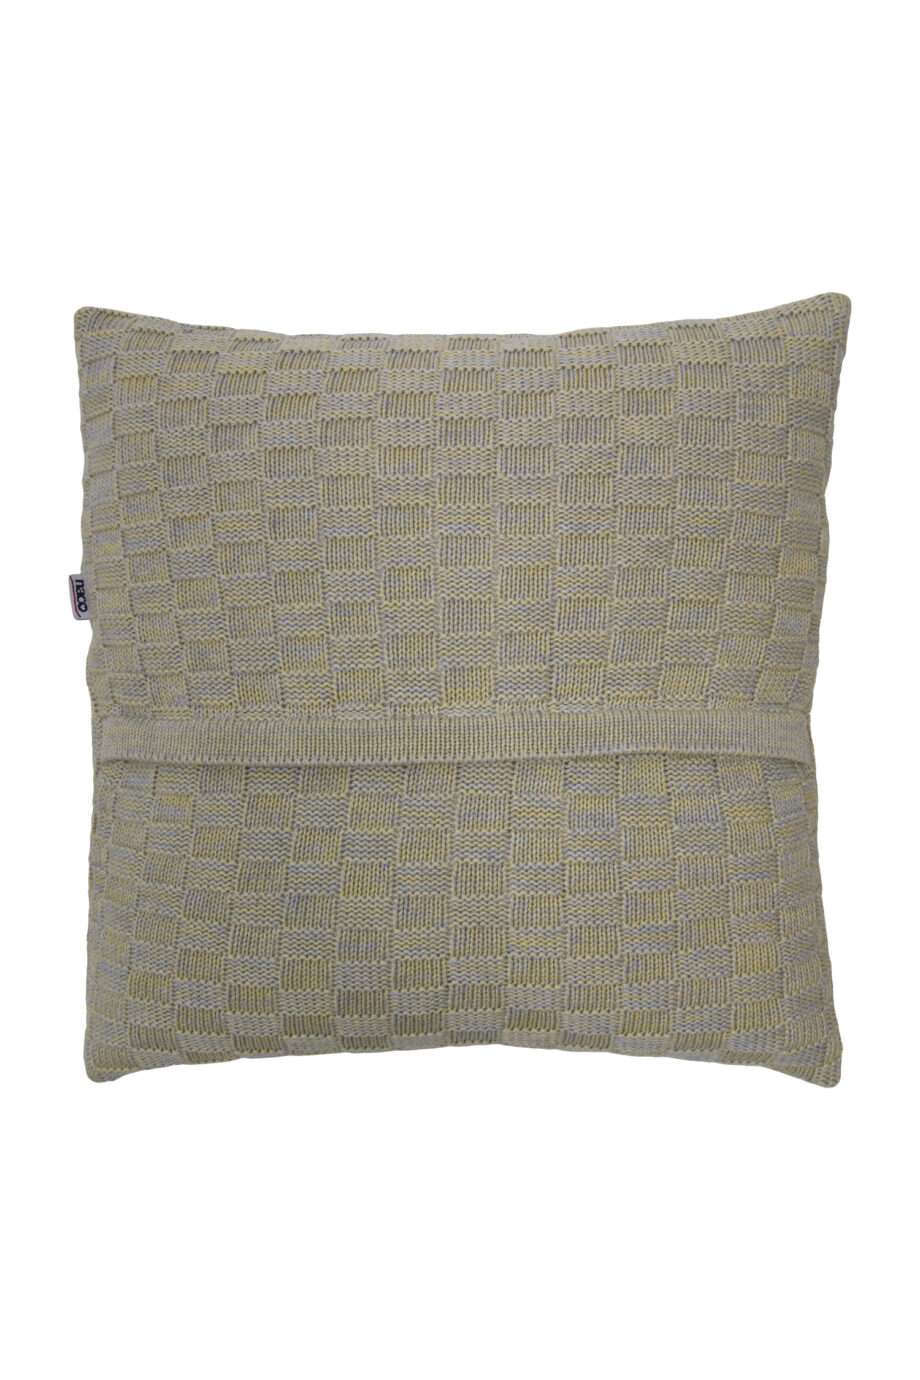 drops mêlée citrus knitted cotton pillowcase xsmall